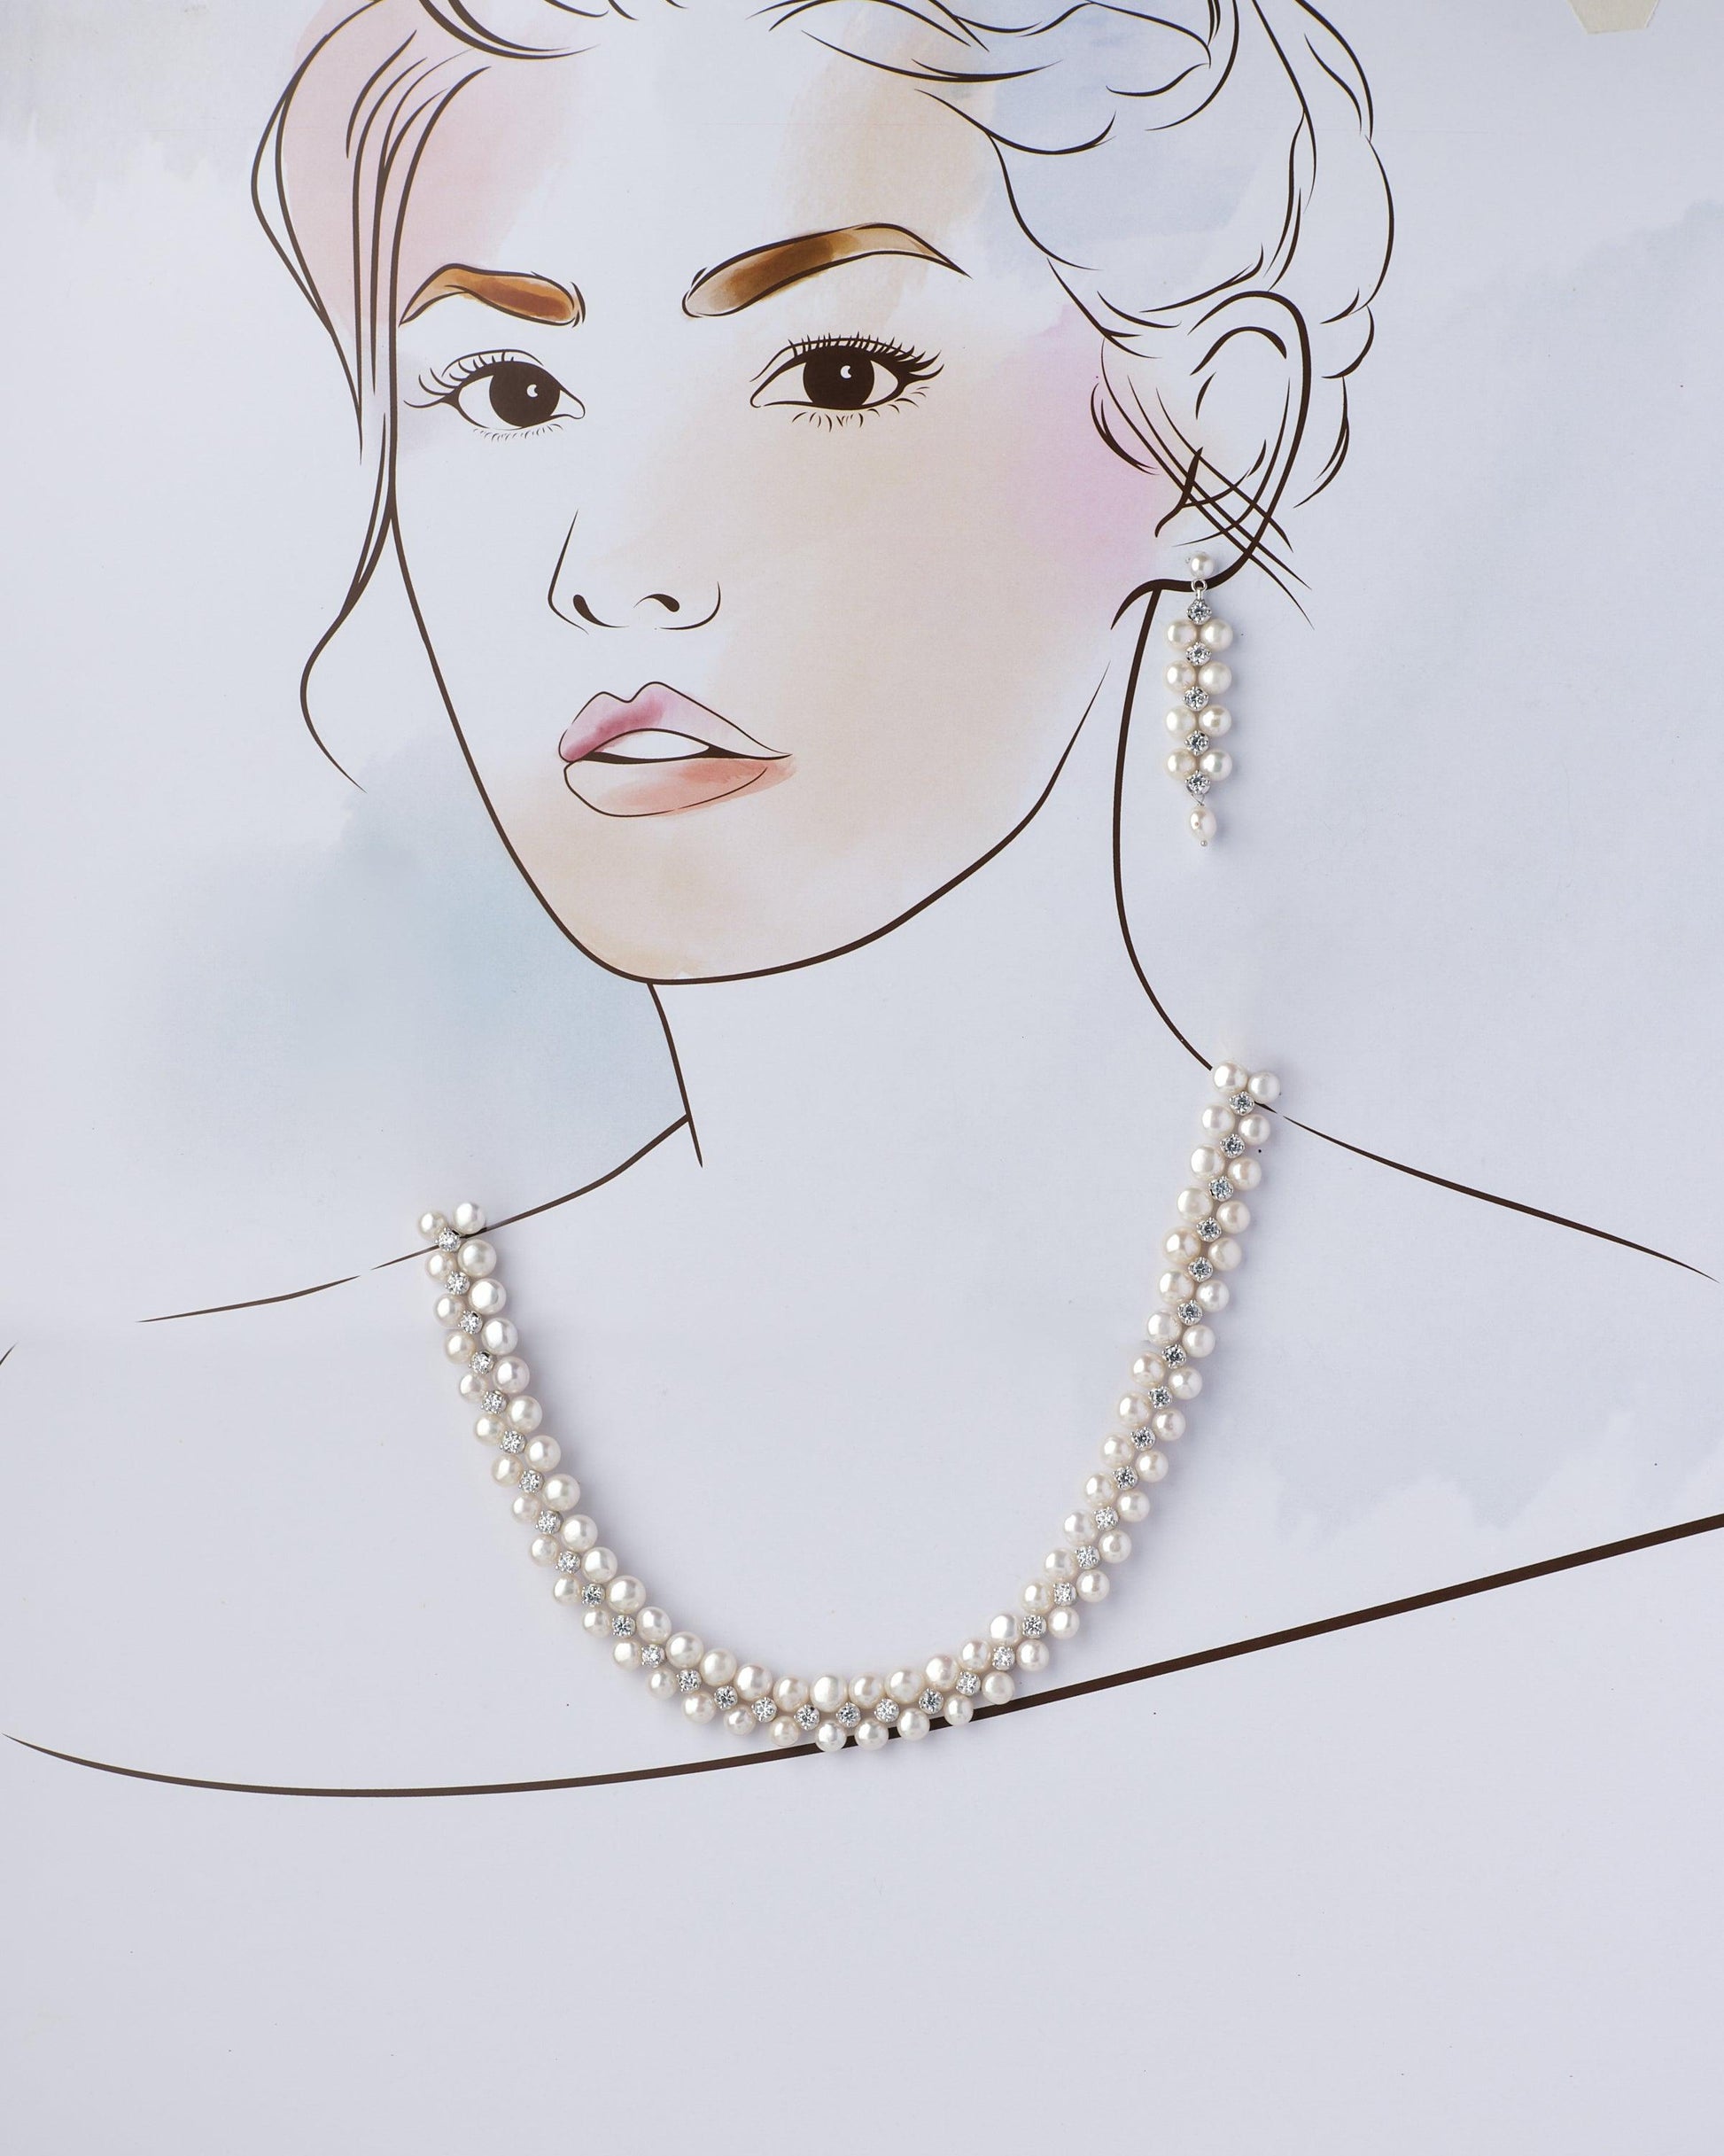 Ravishing AD Pearl Necklace Set - Chandrani Pearls